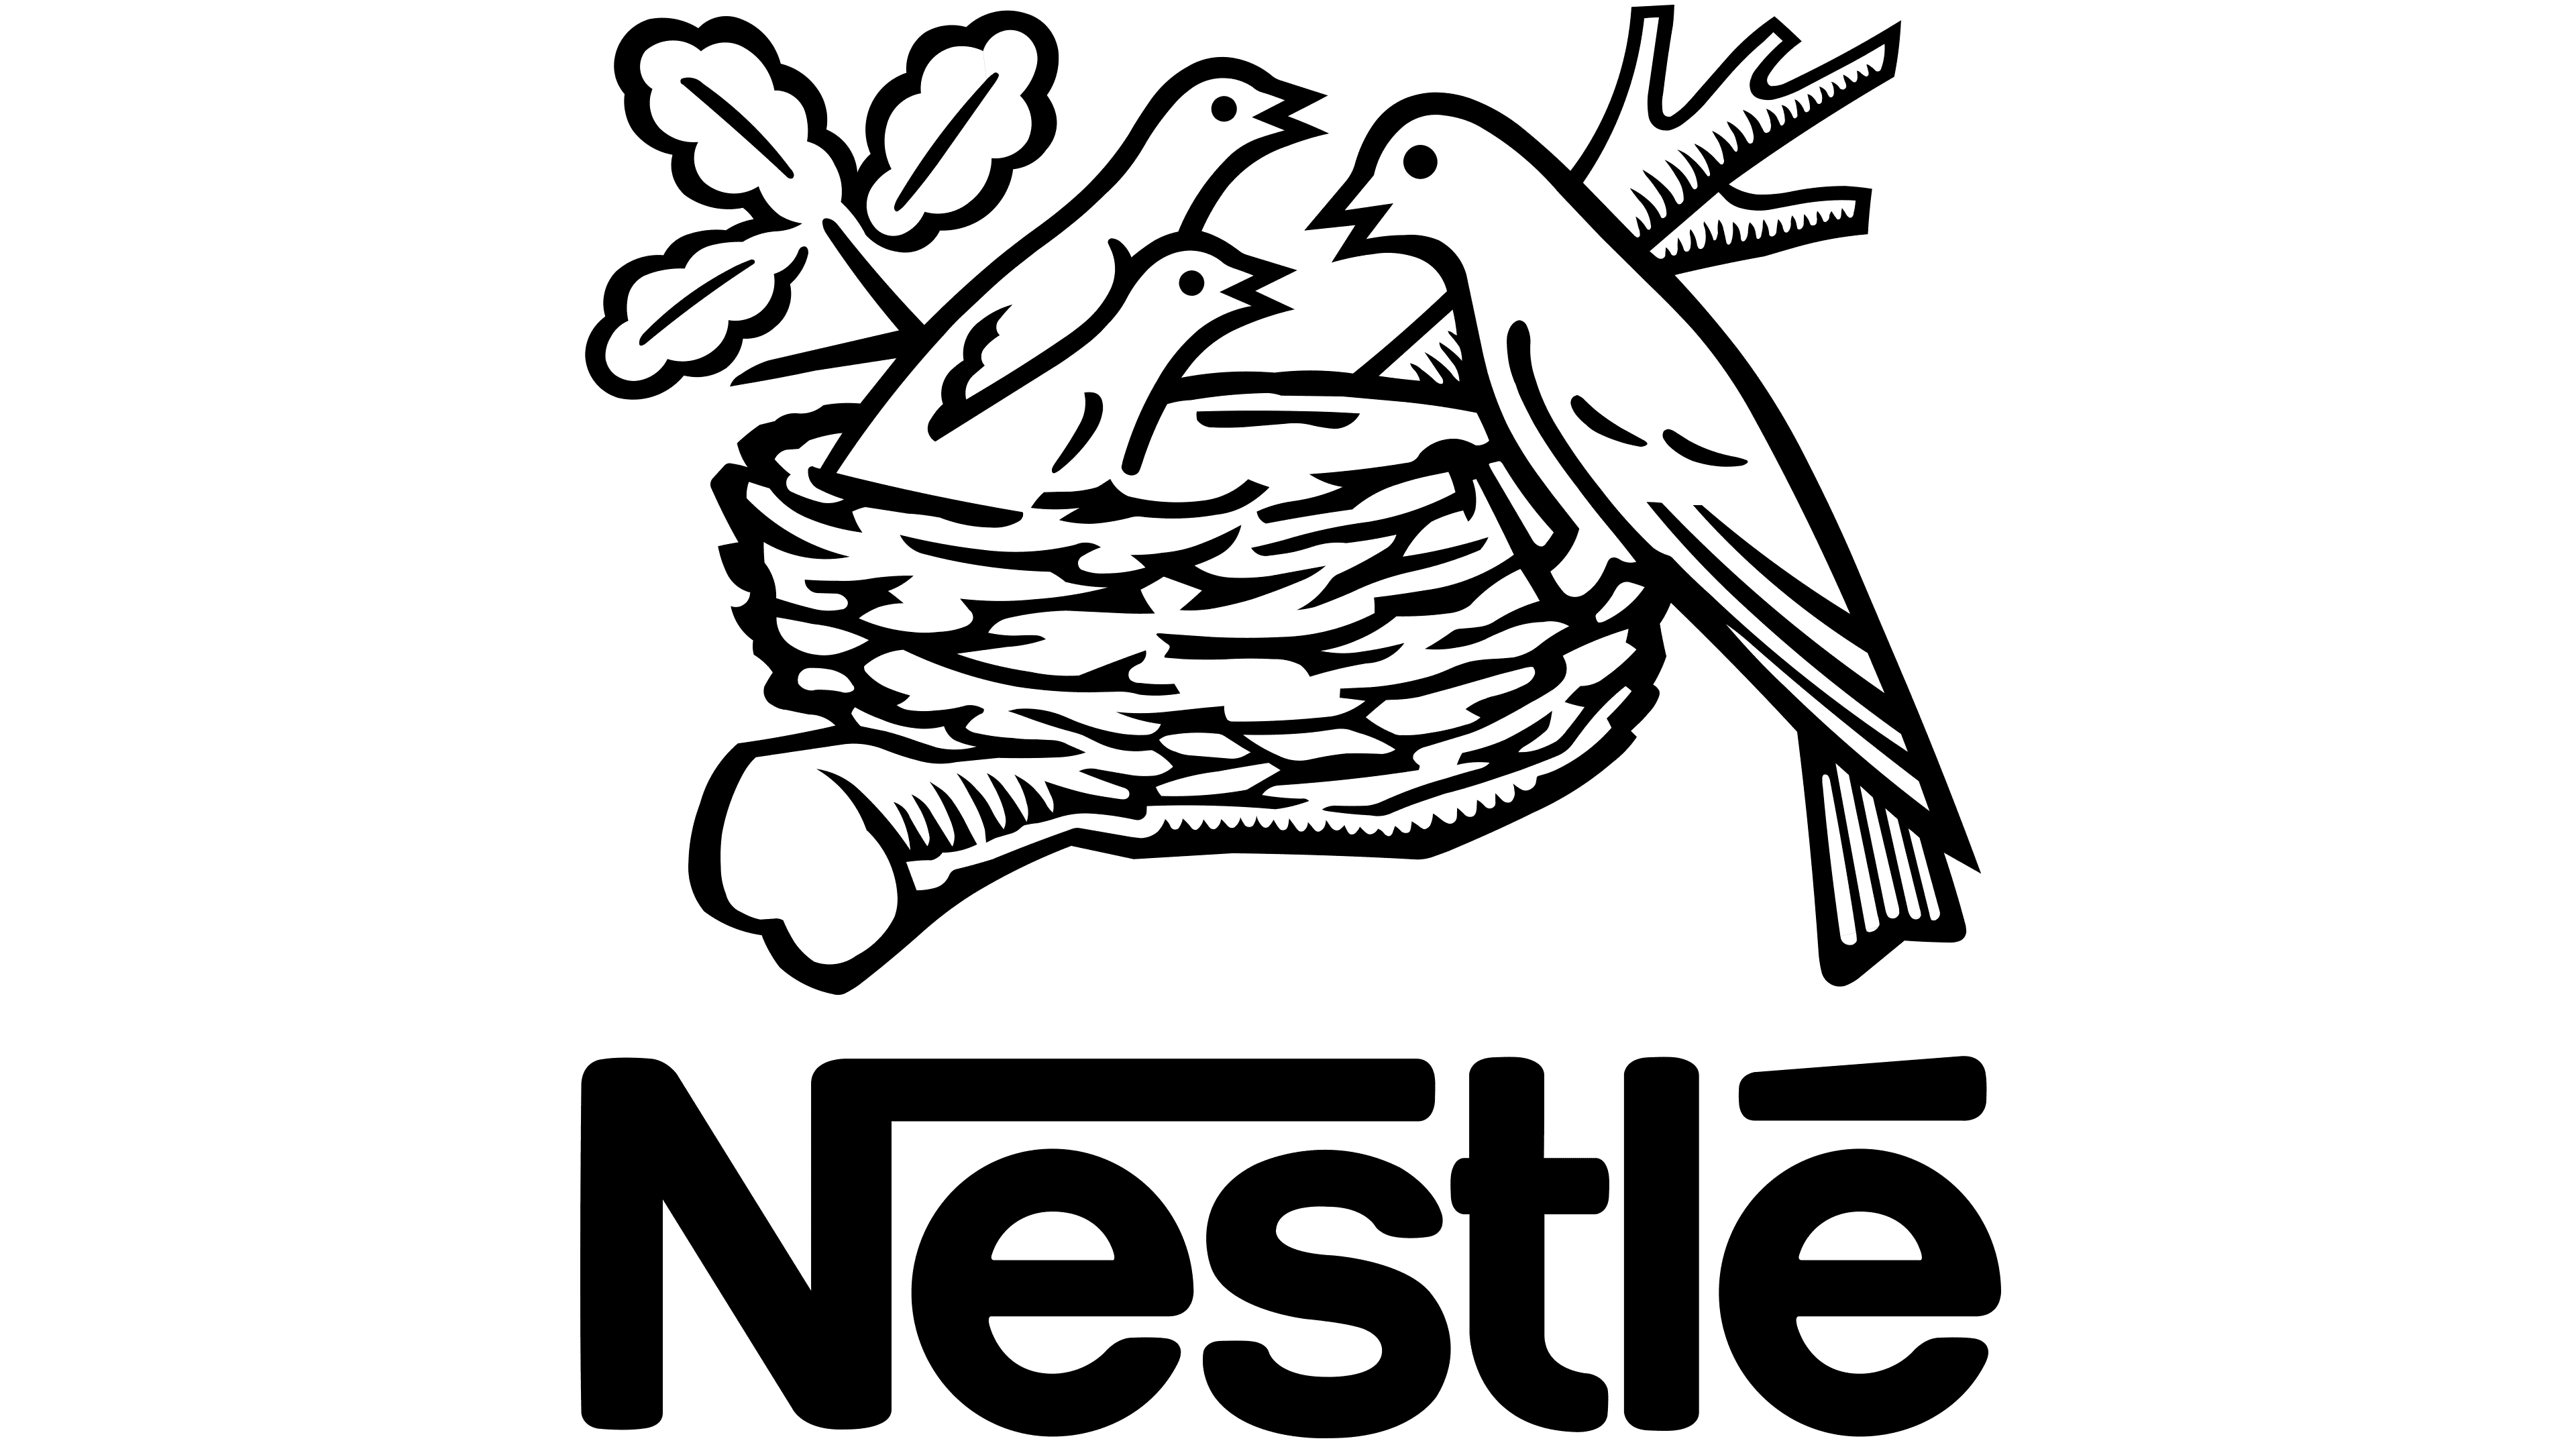 Nestle Logo Transparent